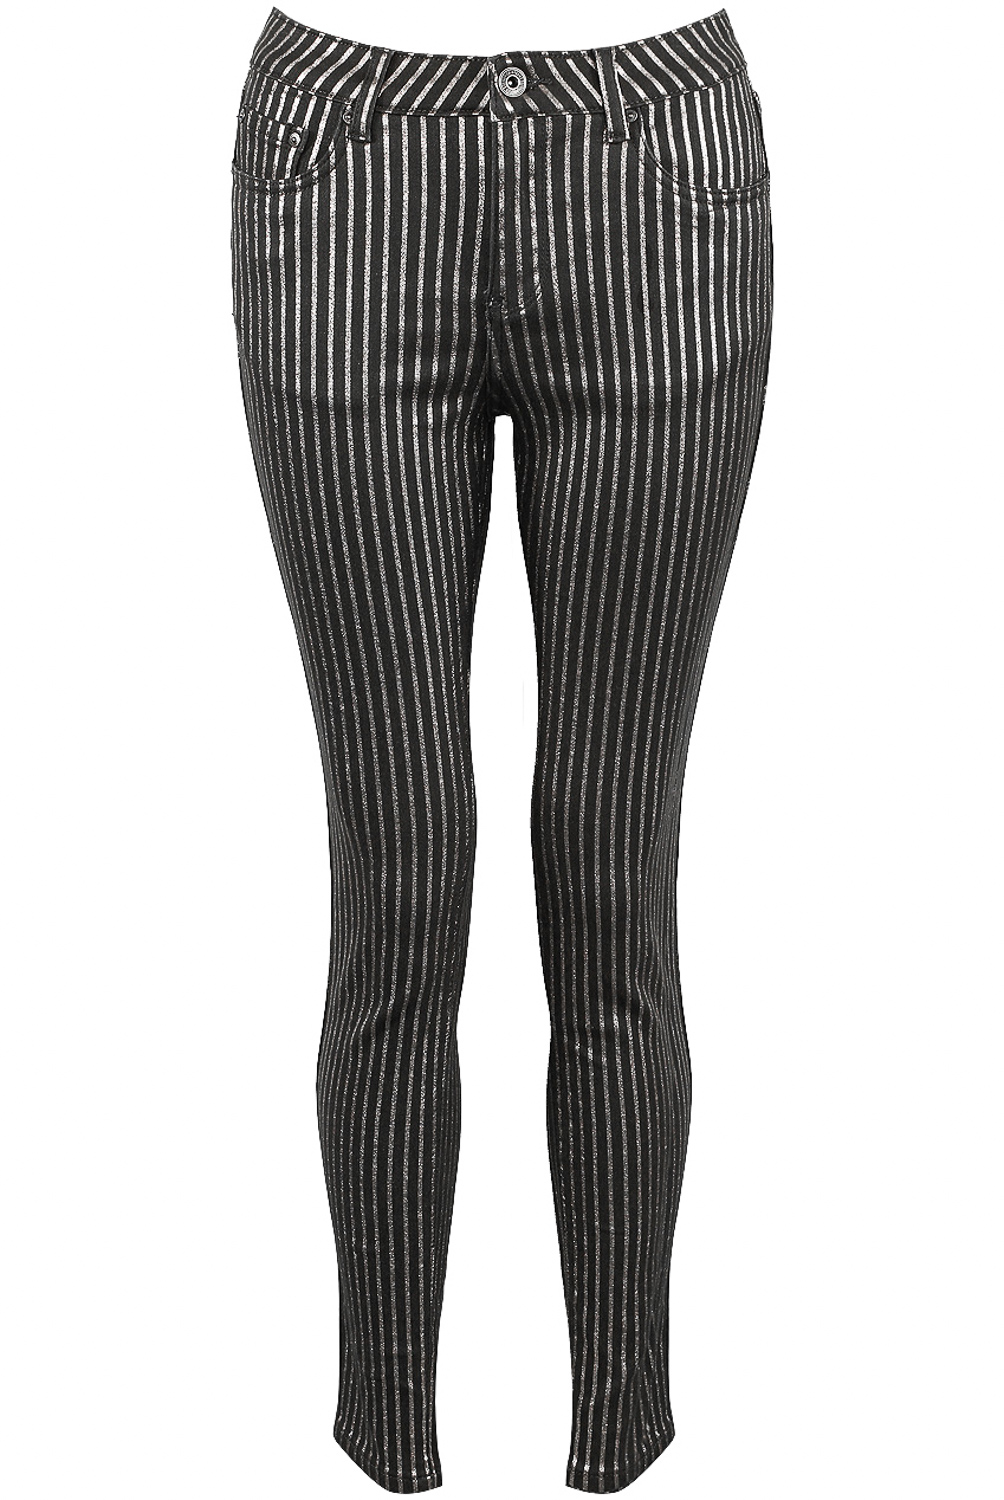 Glitter Stripes Skinny Jeans - Buy Fashion Wholesale in The UK